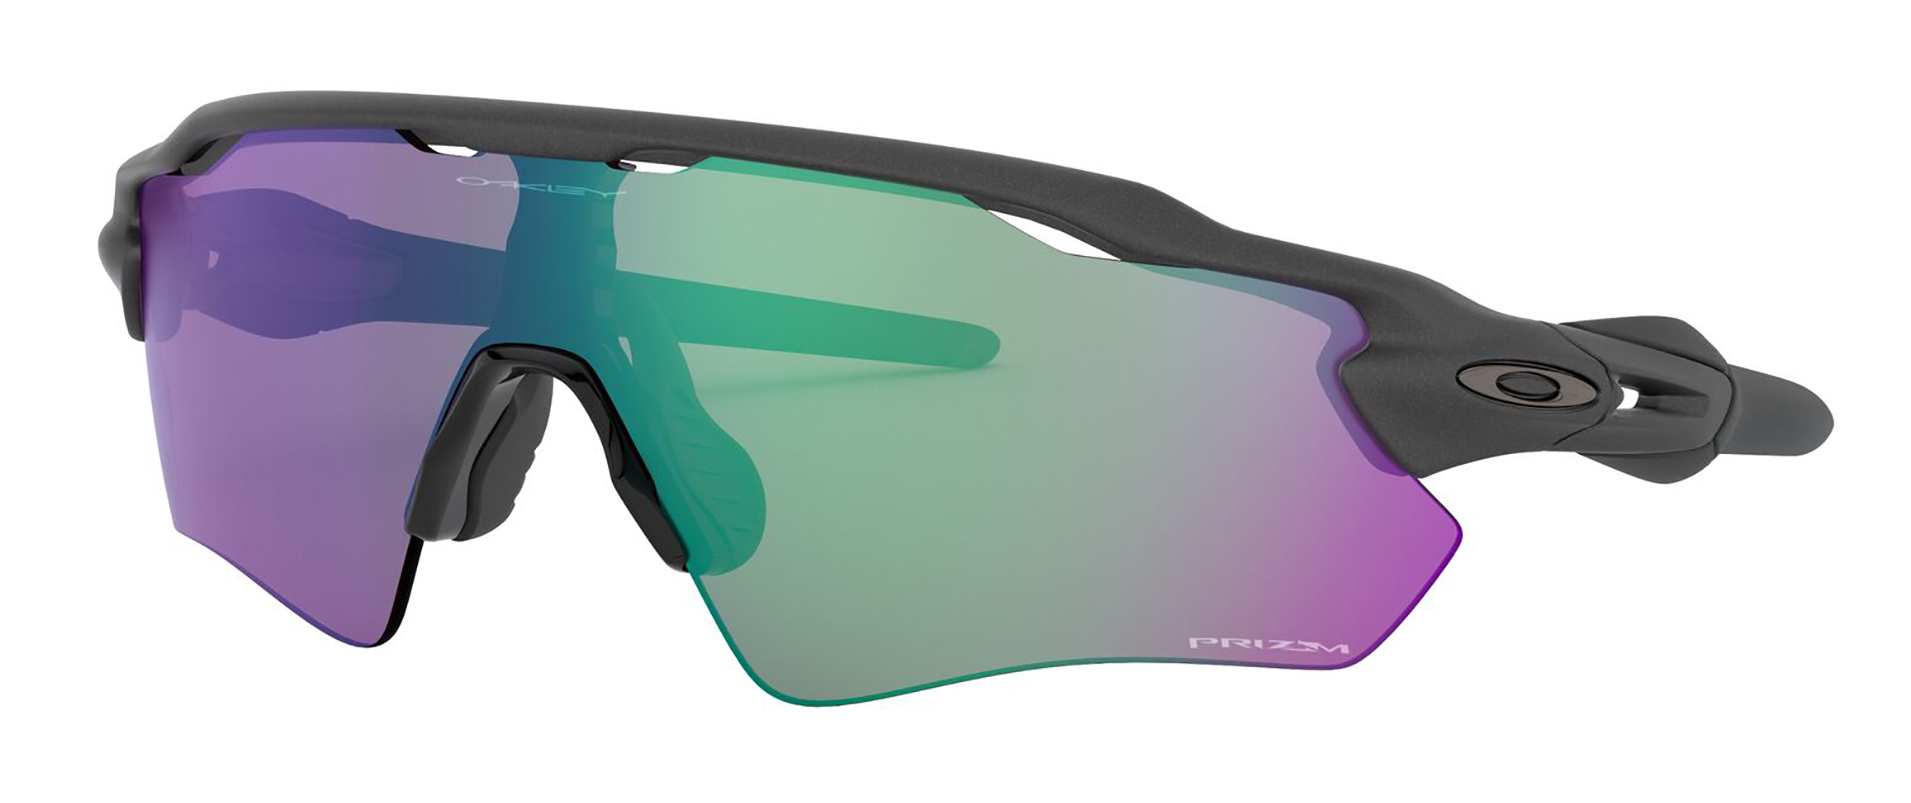 oakley radar ev path best oakley mens sunglasses in black with prizm jade green and purple shield lens